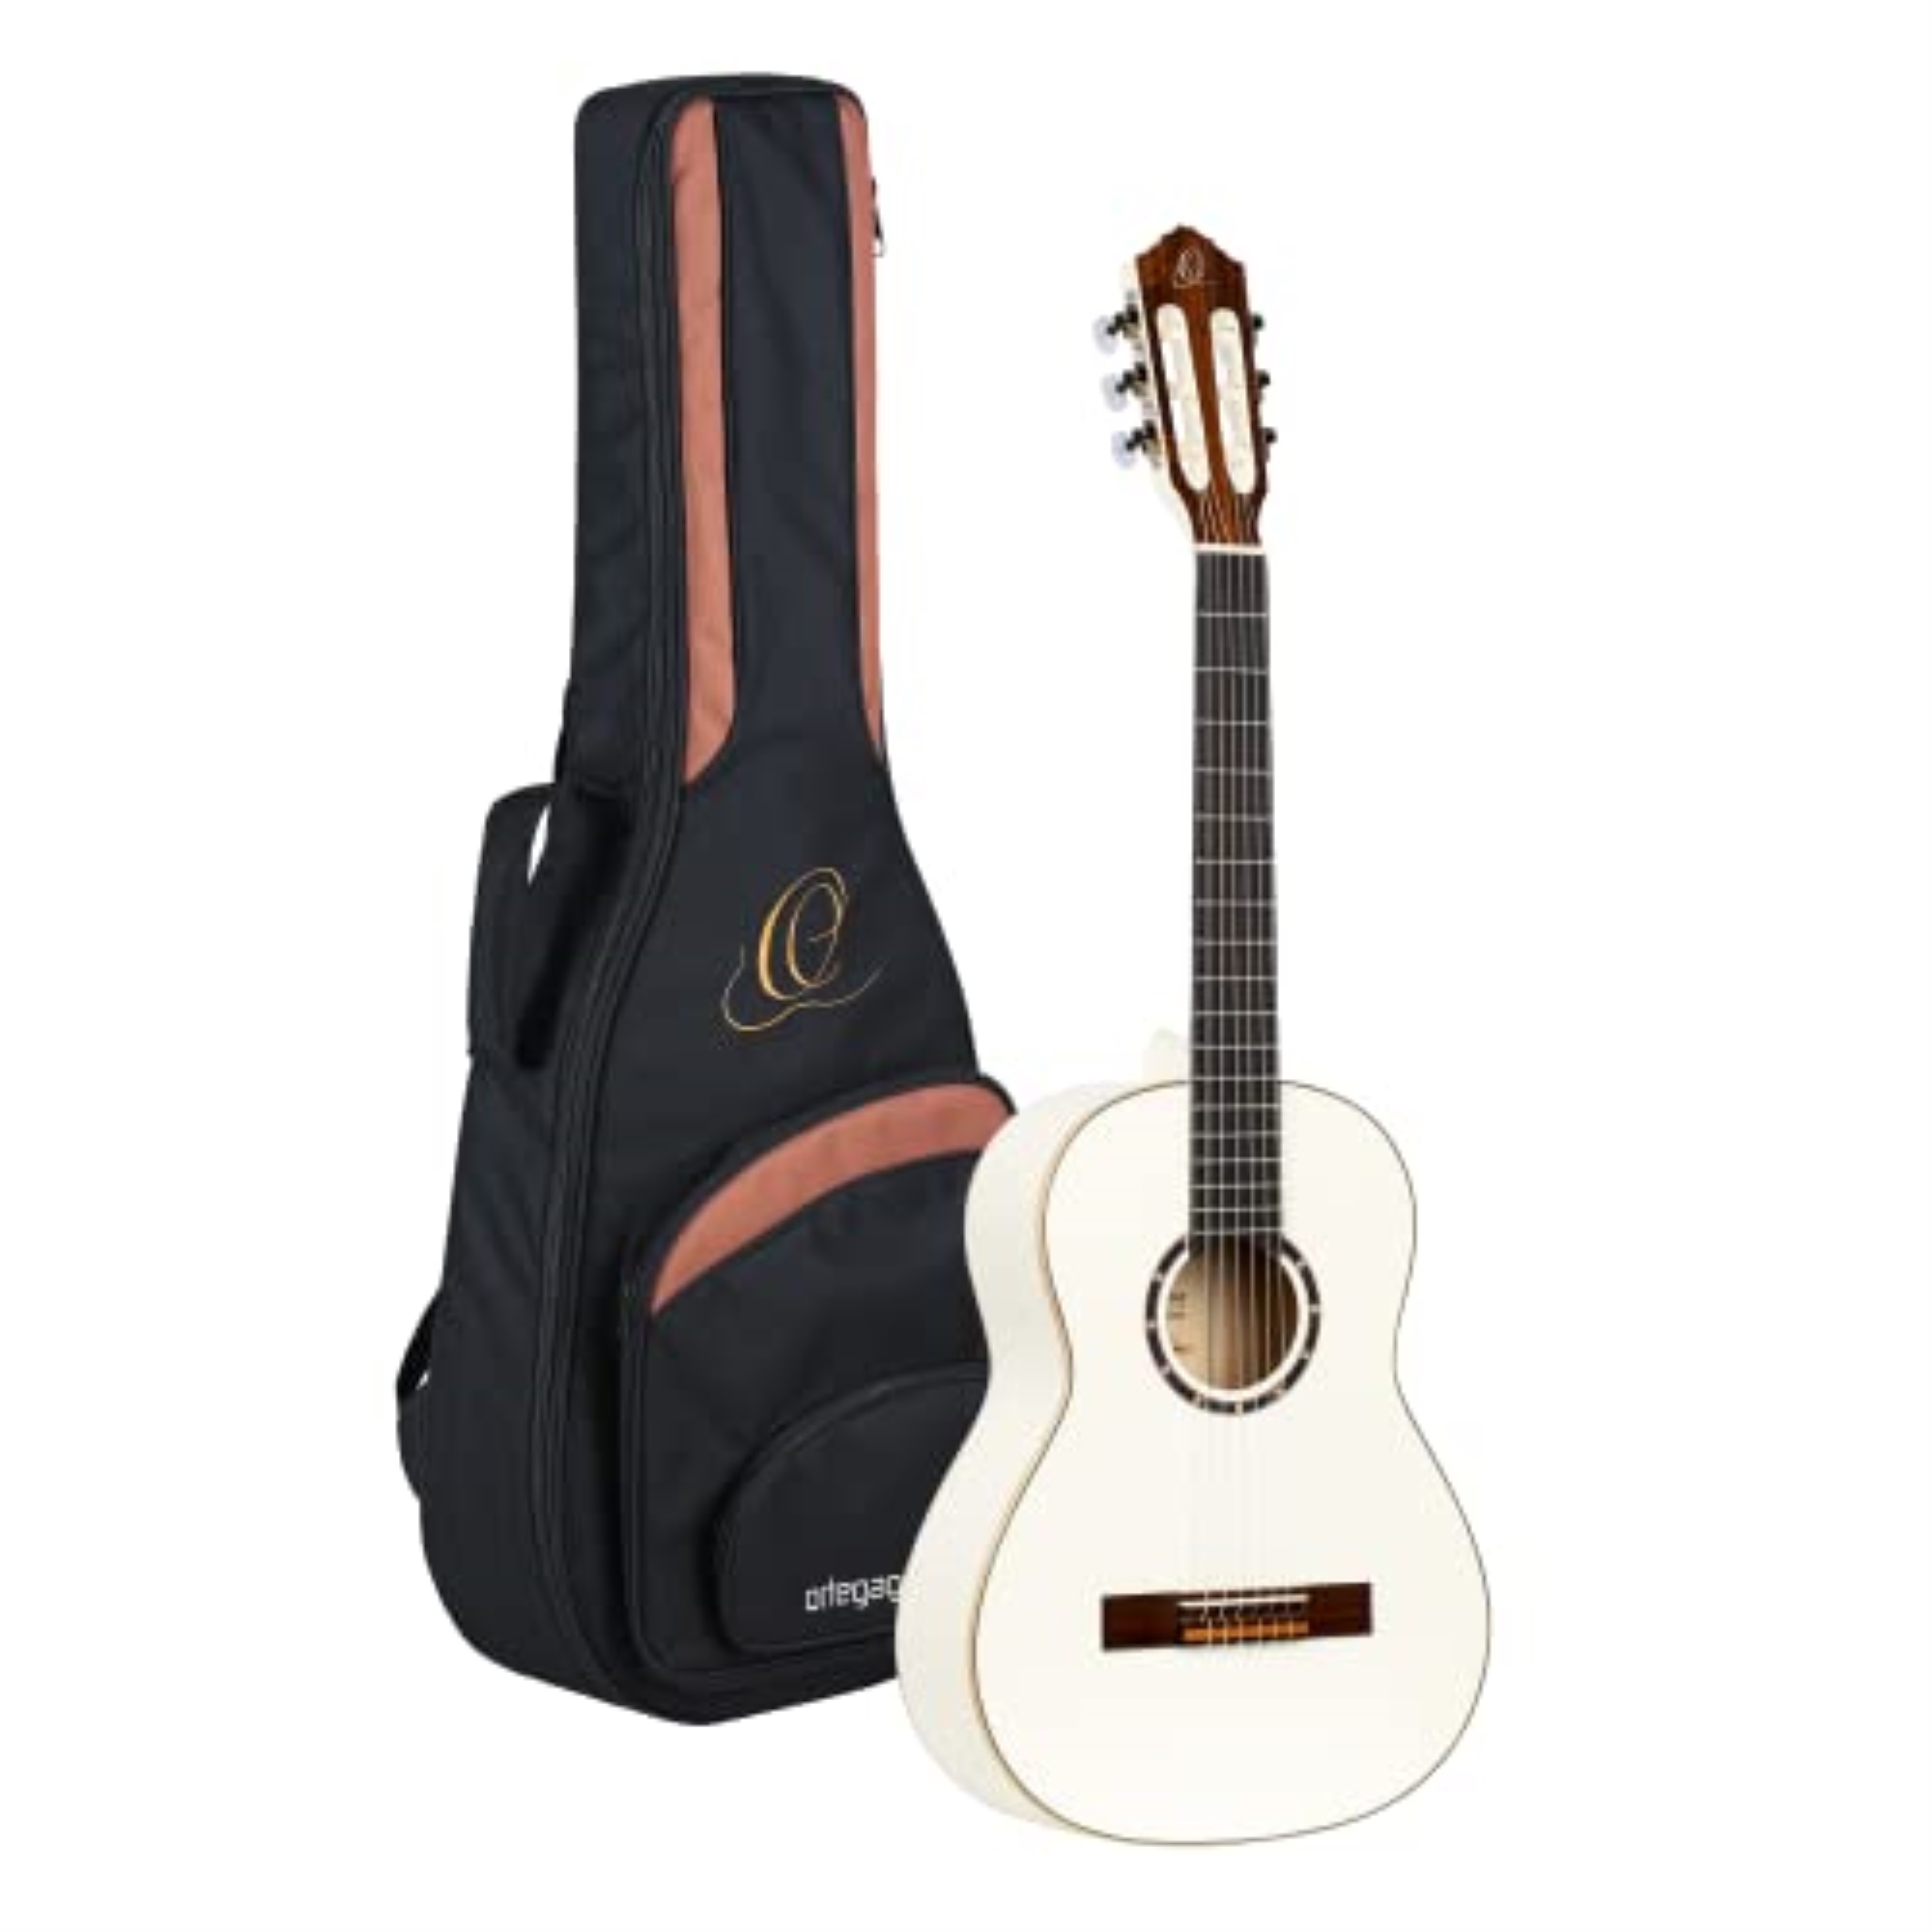 Ortega Guitars Family Series 3/4 Size Nylon Classical Guitar with Bag